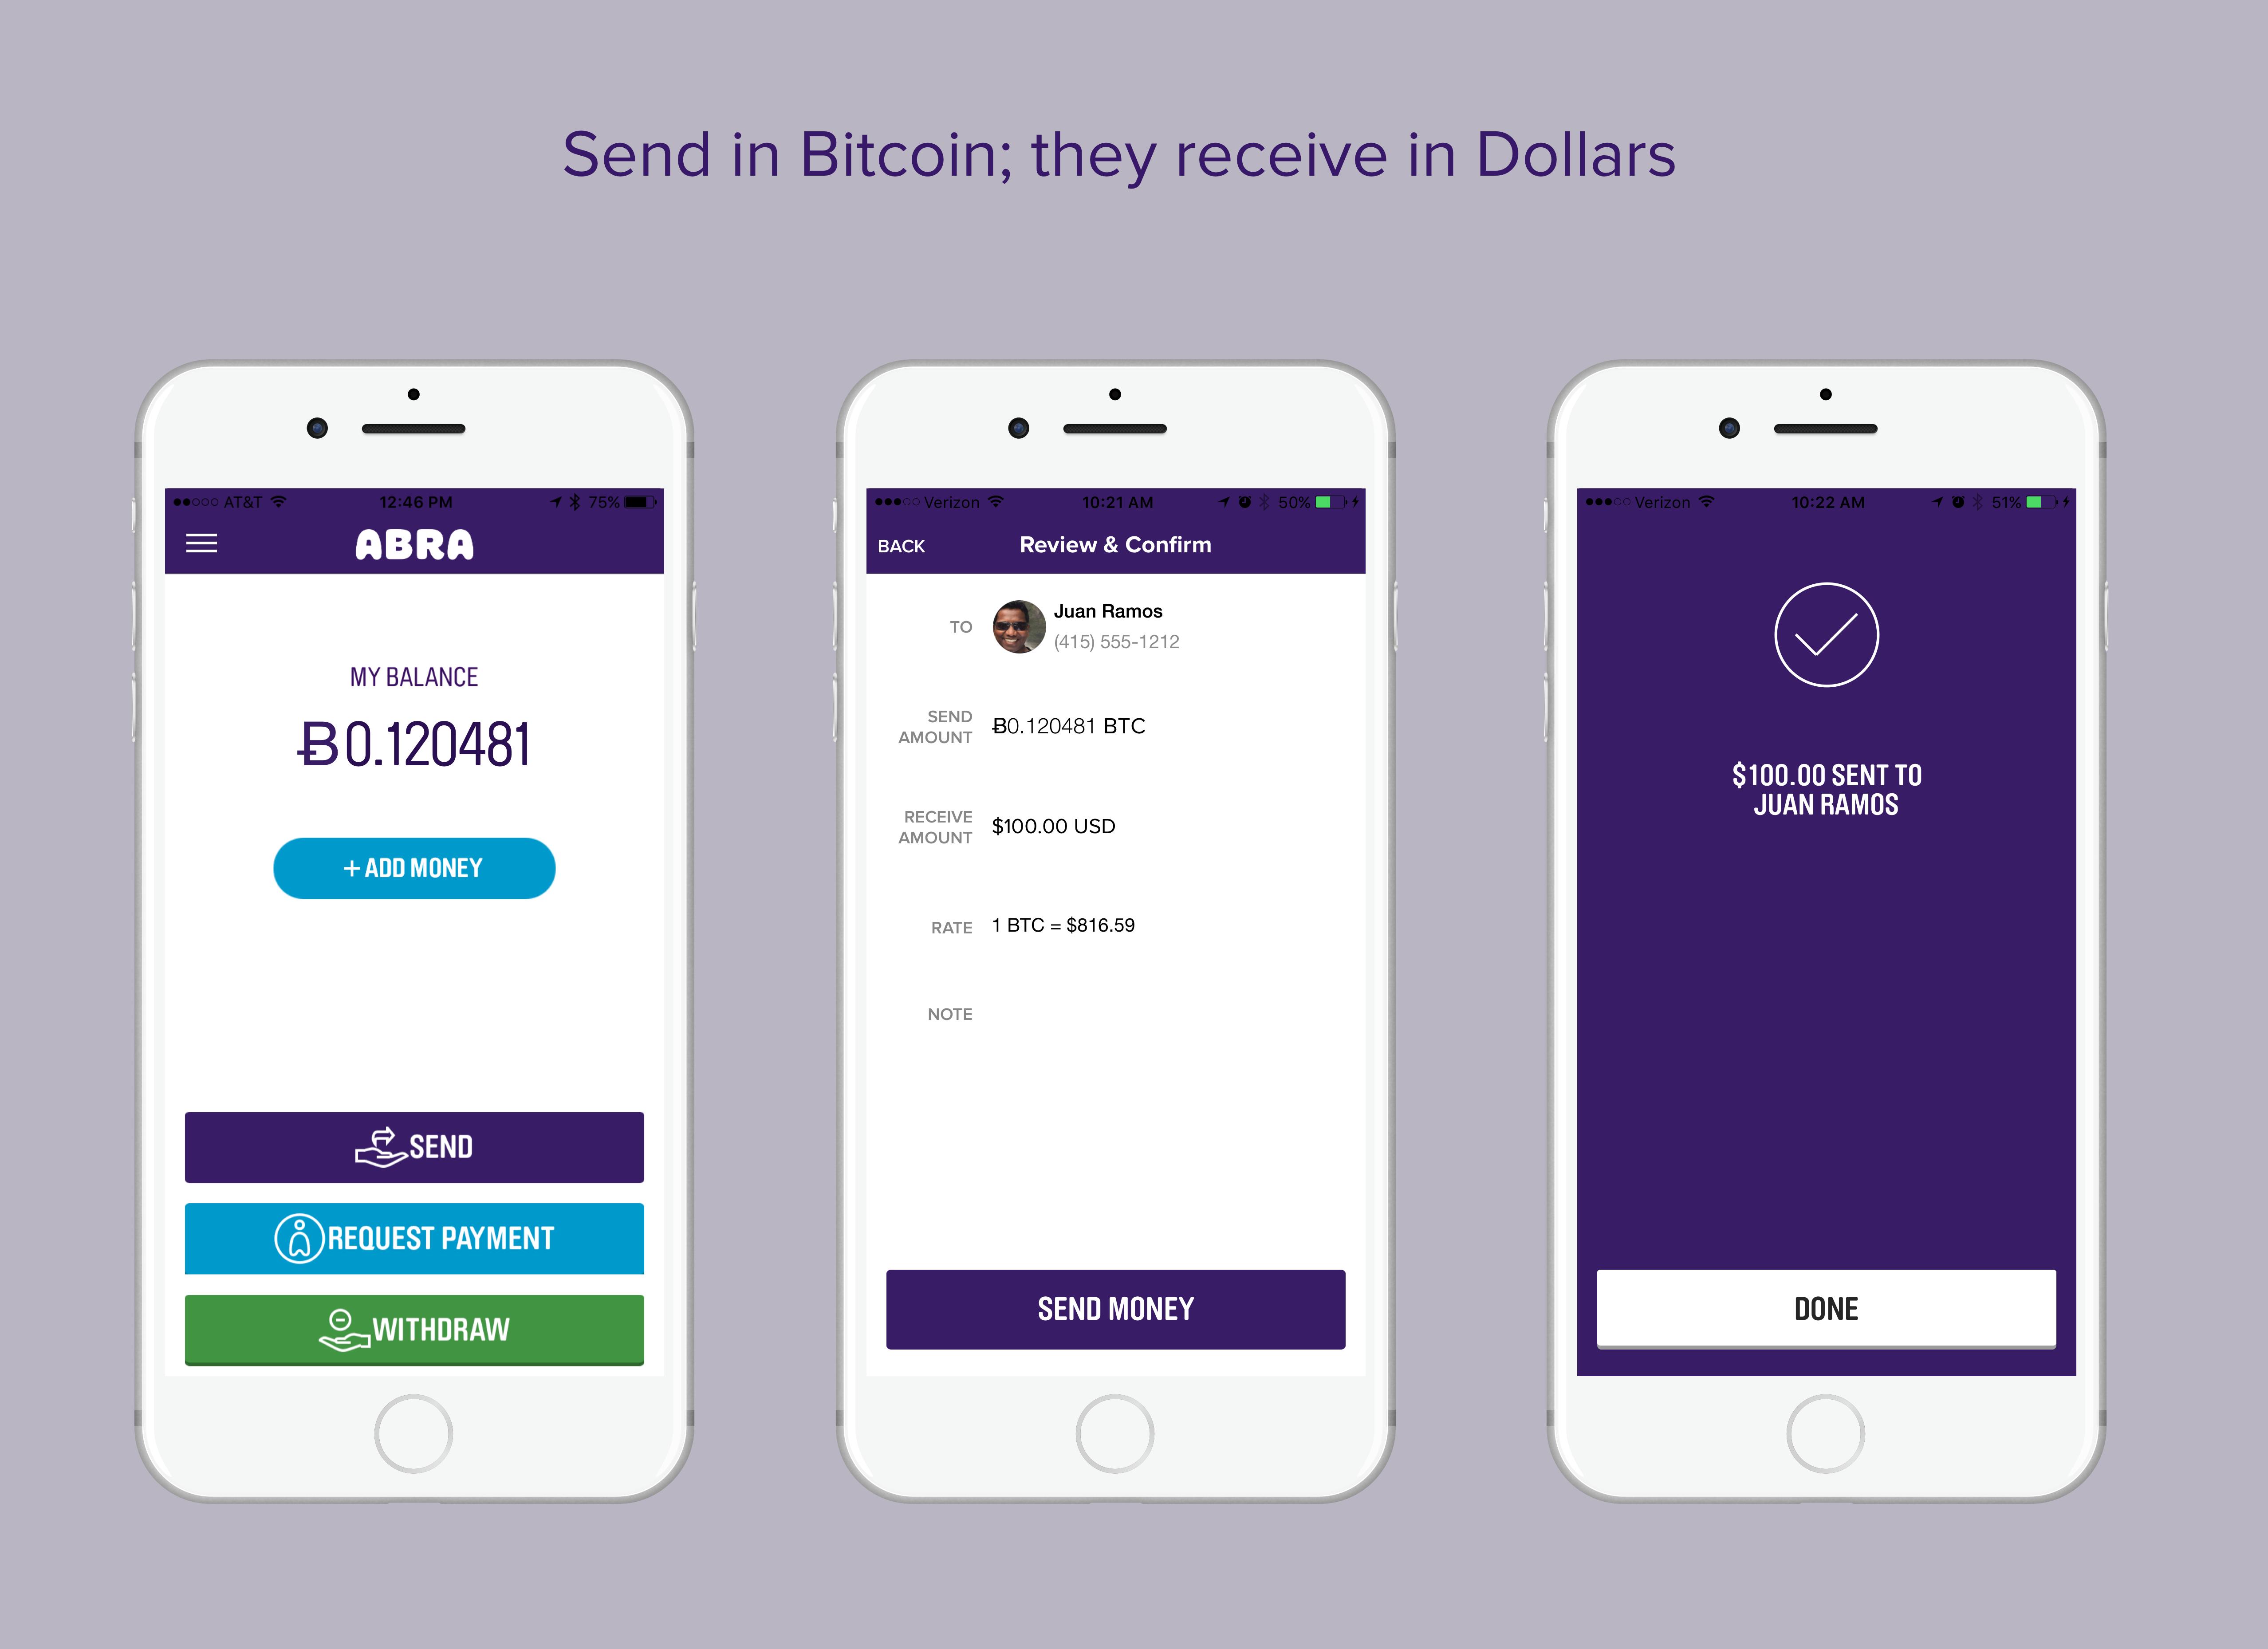 Send in Bitcoin, receive in Dollars